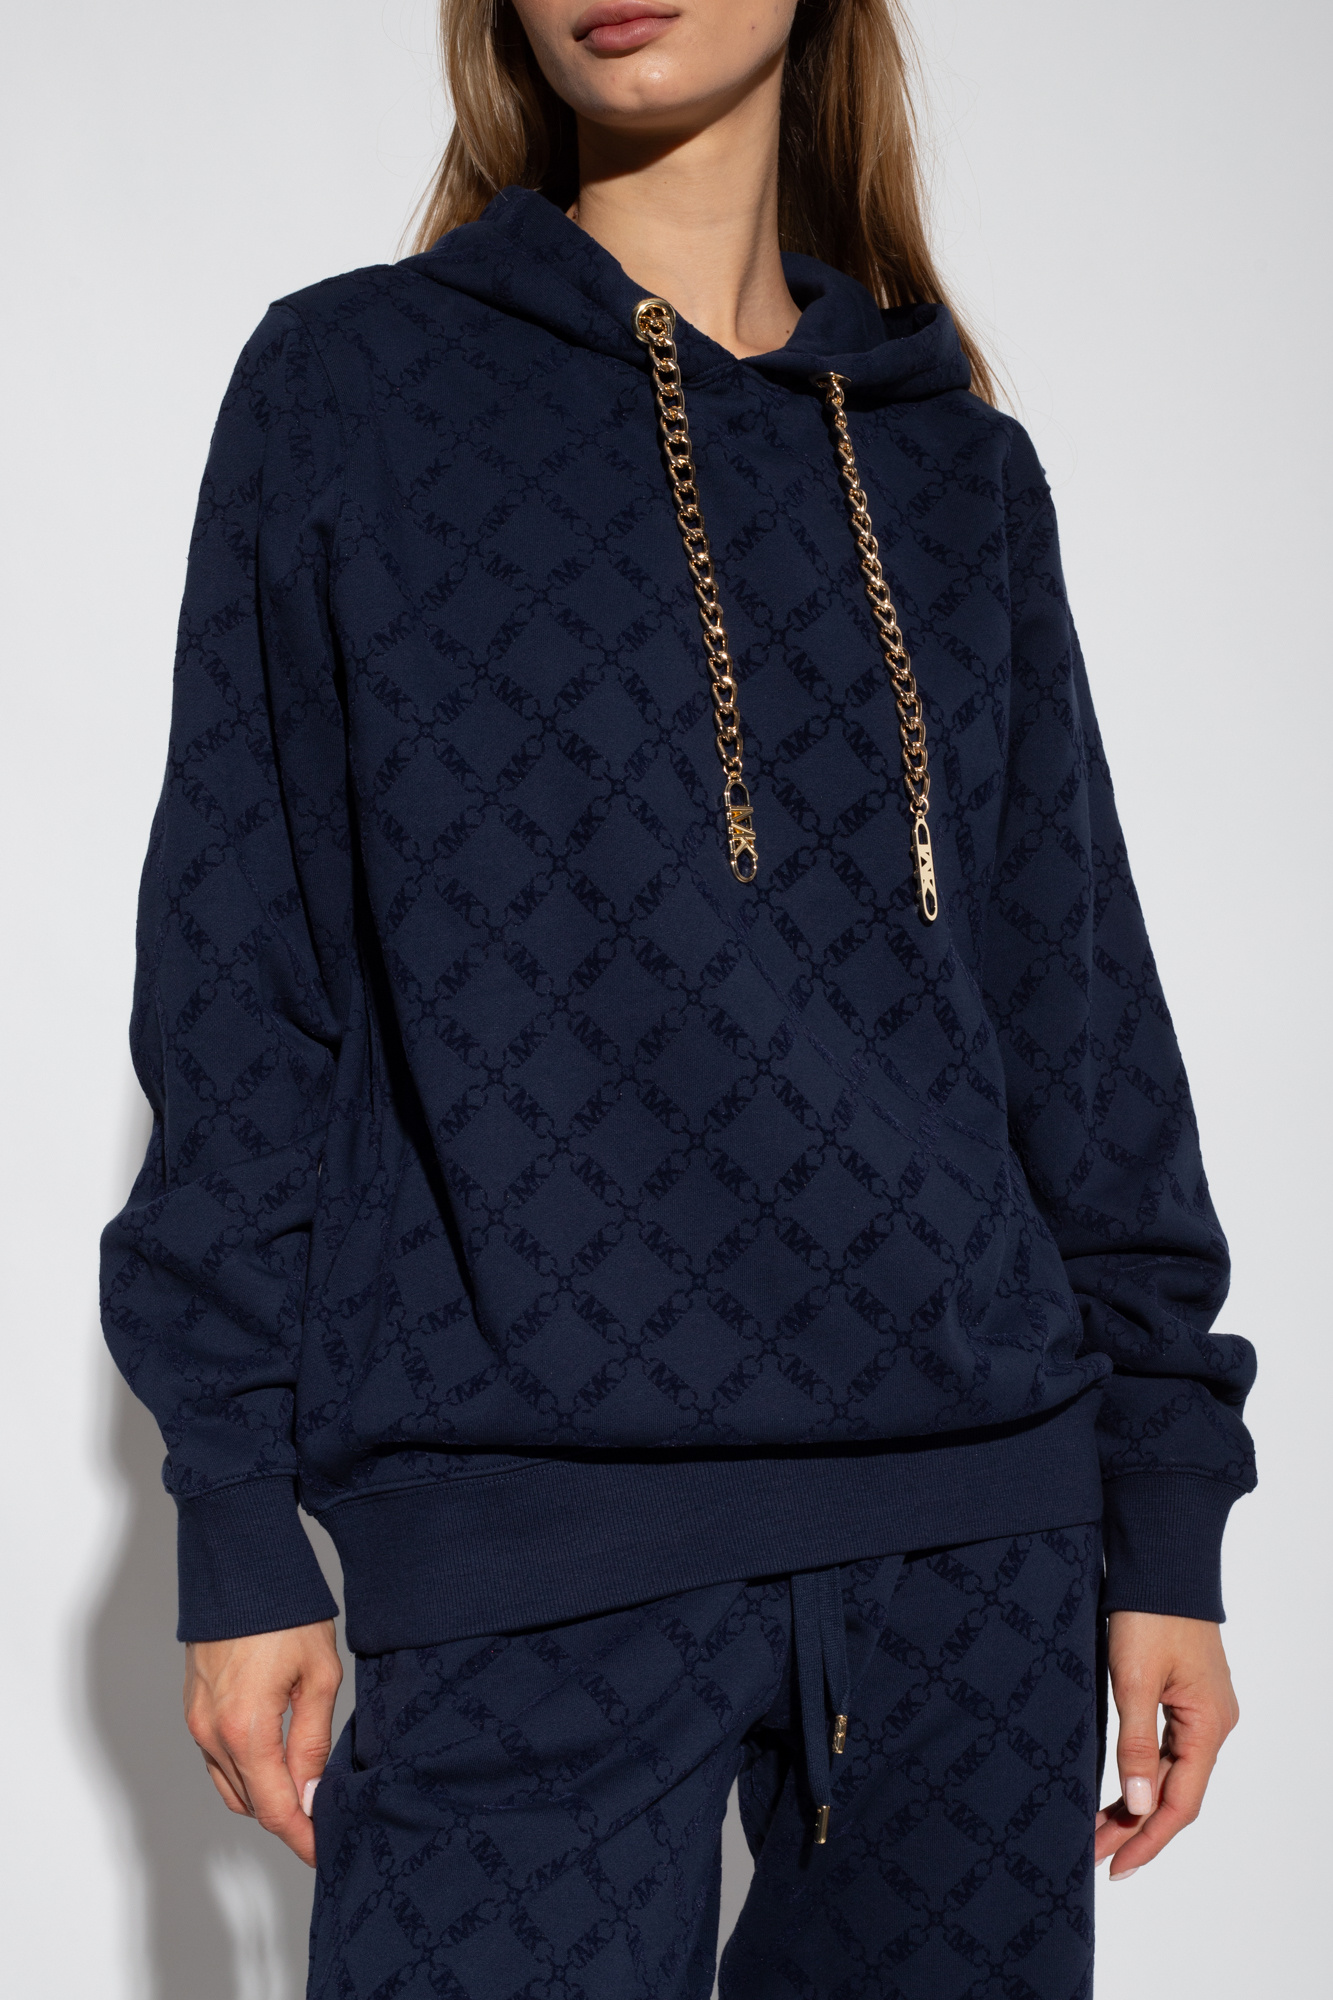 Louis Vuitton Monogram Zip-Through Hoodie, Blue, Xs